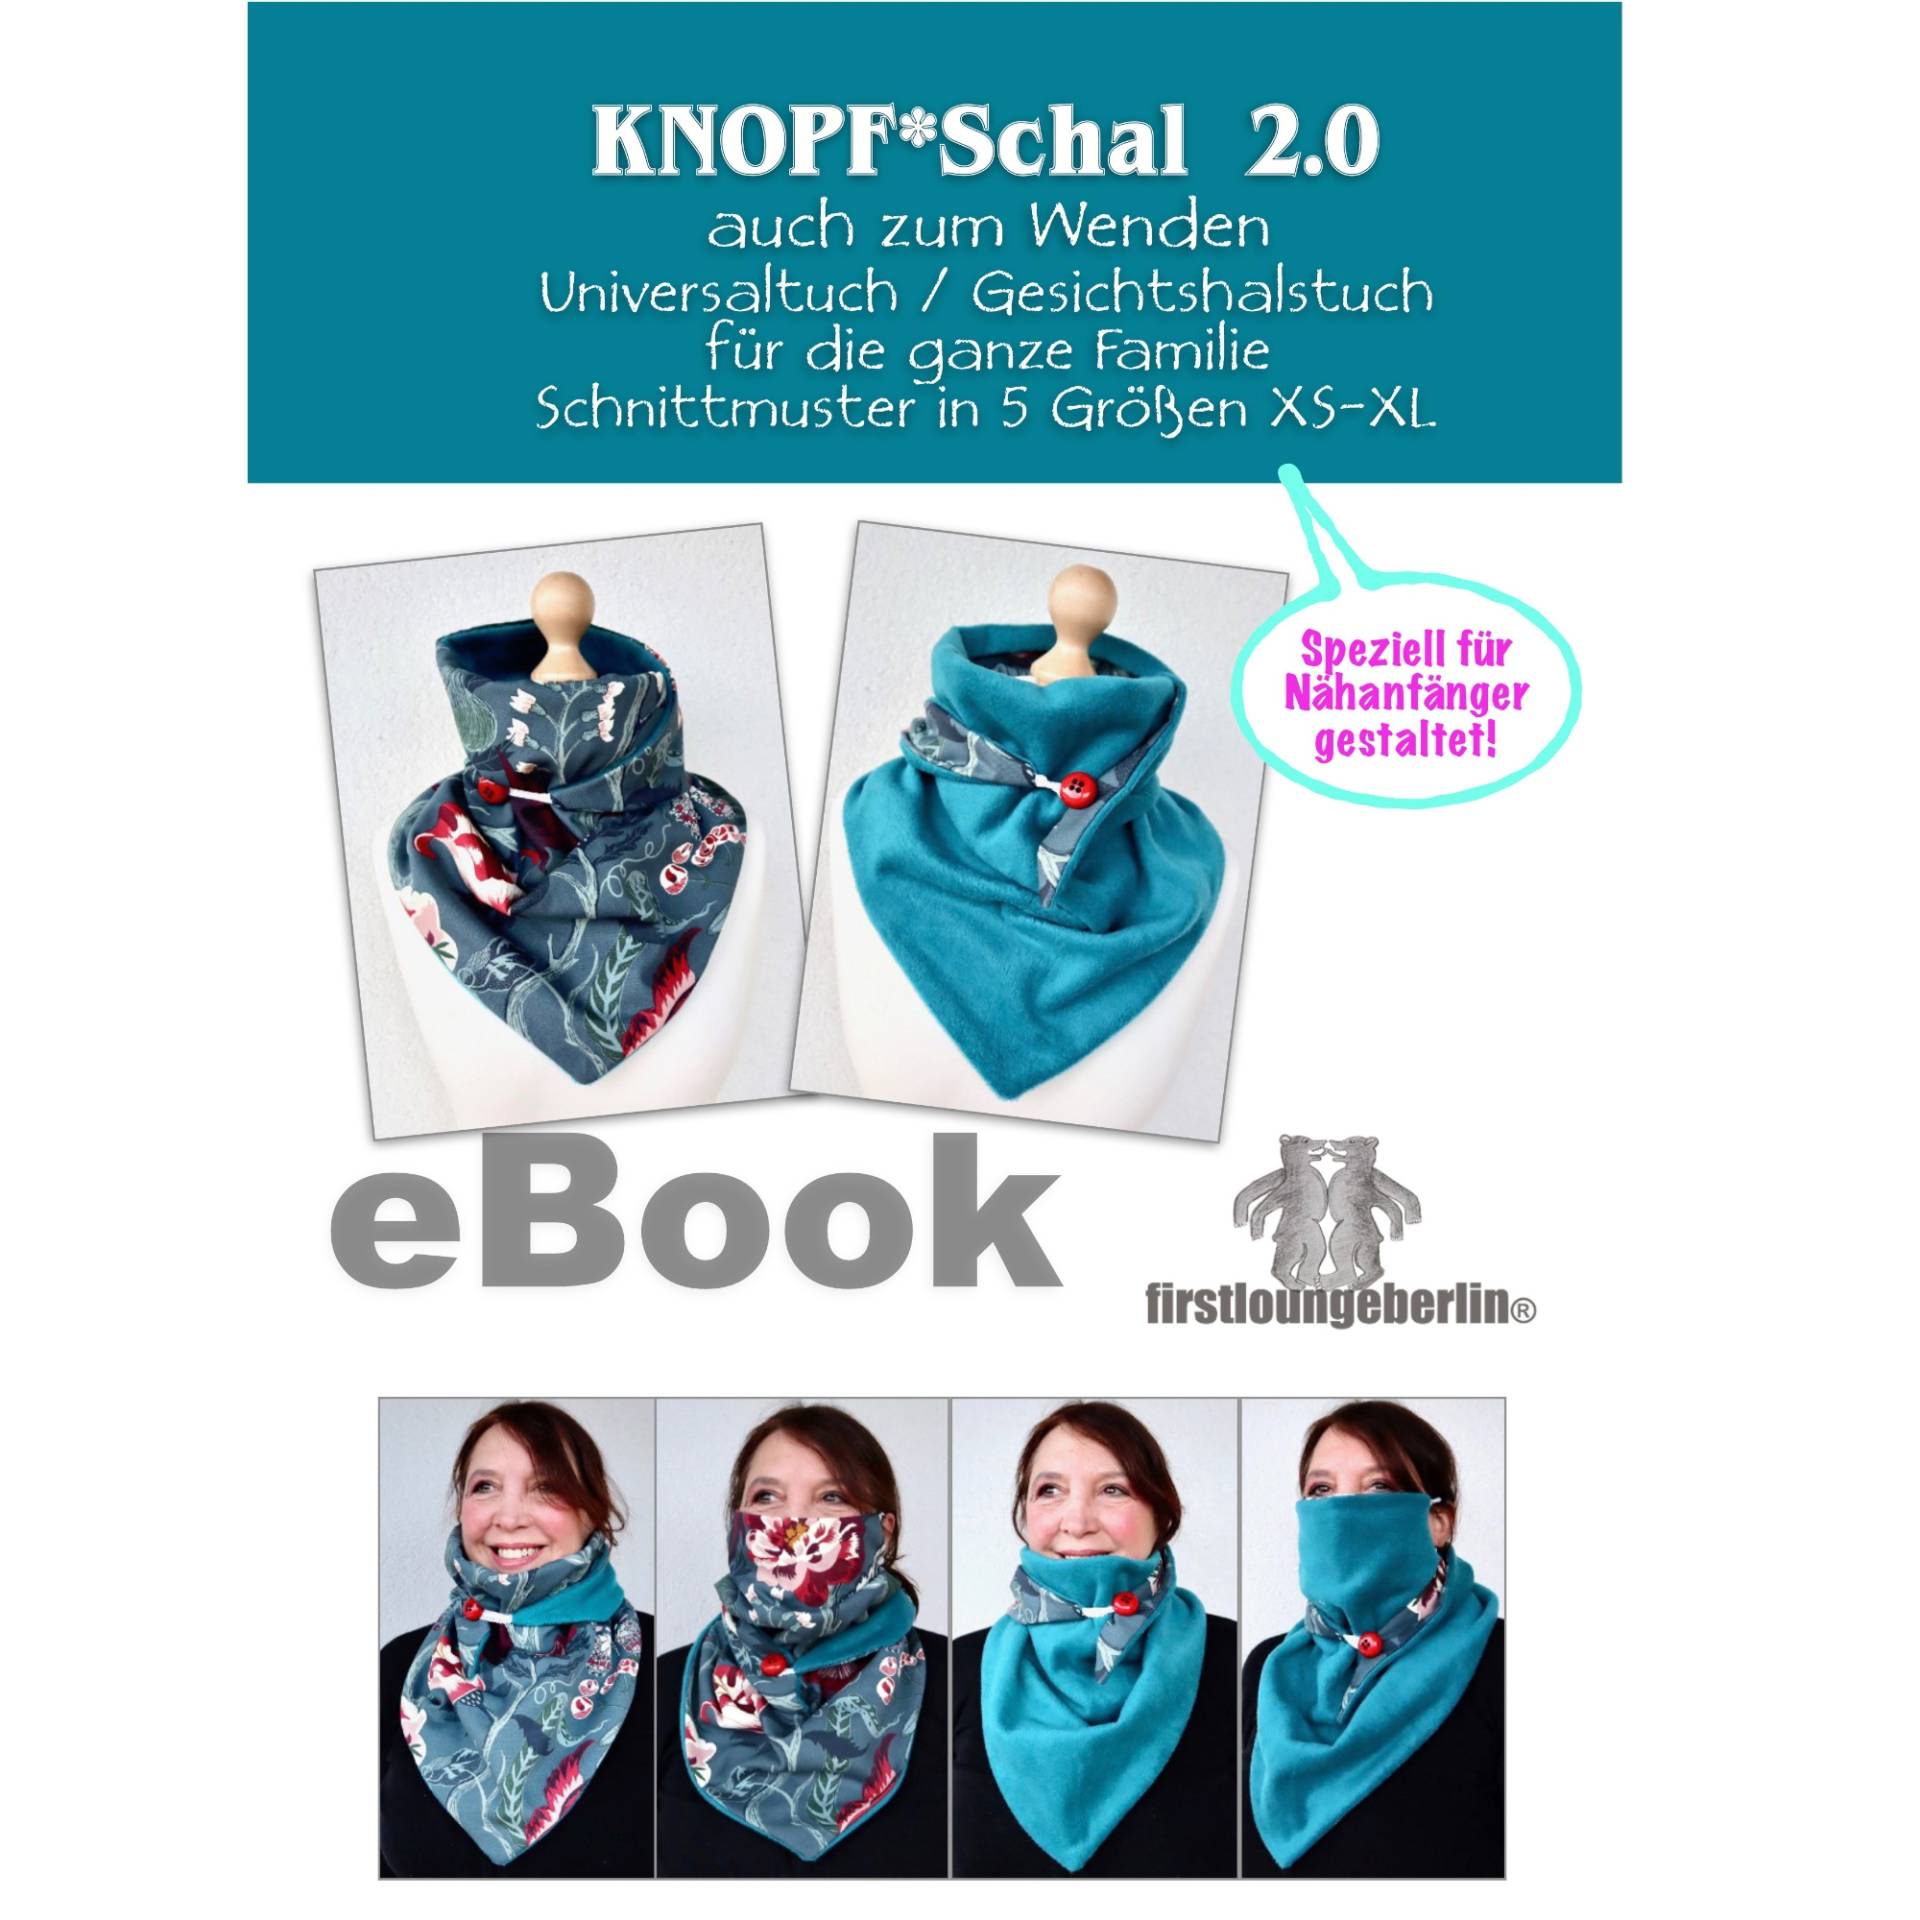 E-Book Firstlounge Berlin Knopfschal 2.0 von Stoffe Hemmers